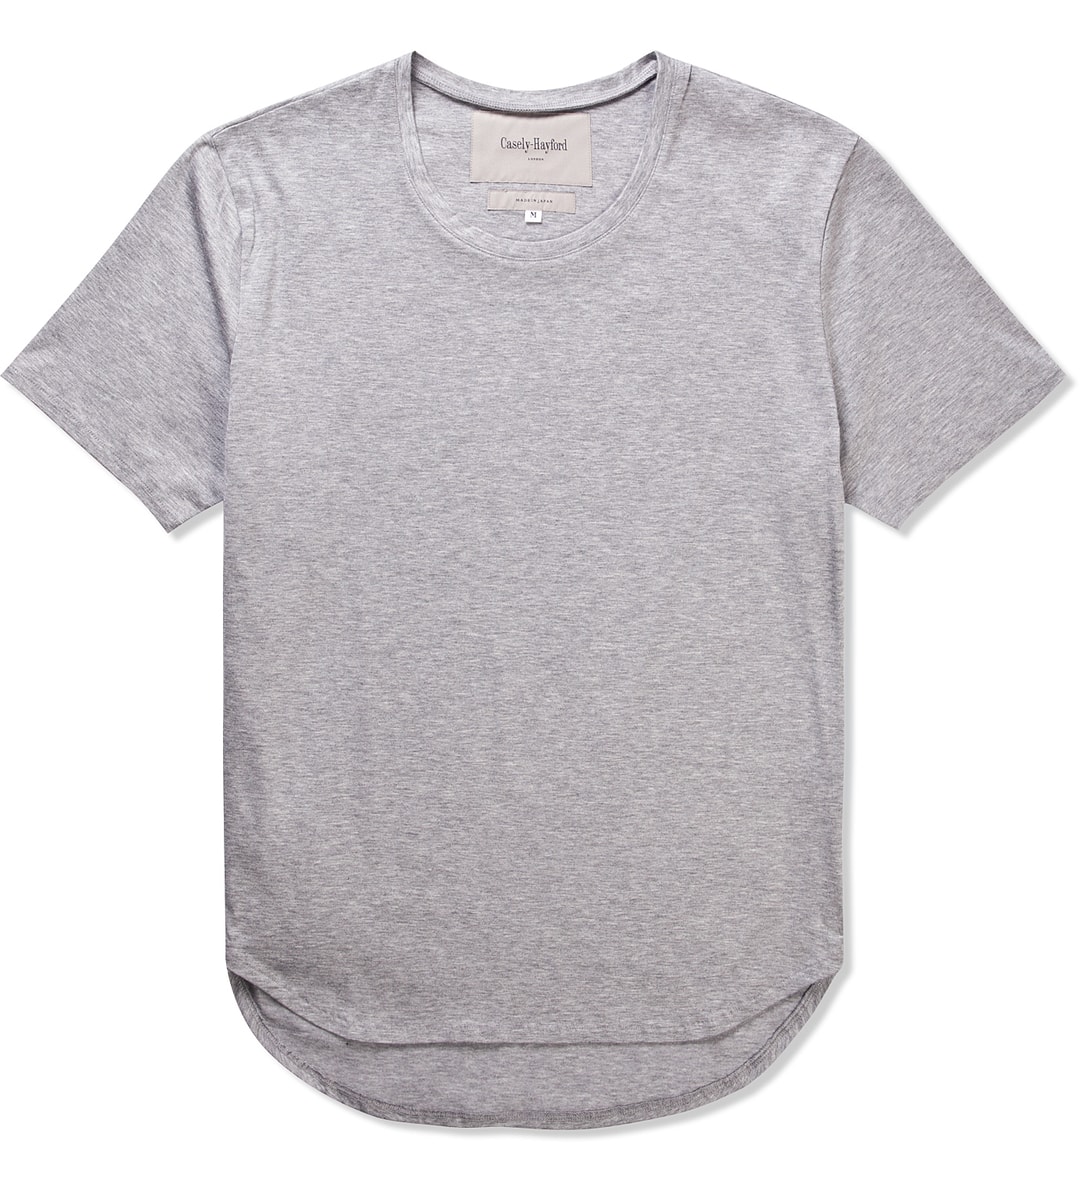 Casely Hayford - Grey Fayzd Short Sleeved T-Shirt | HBX - Globally